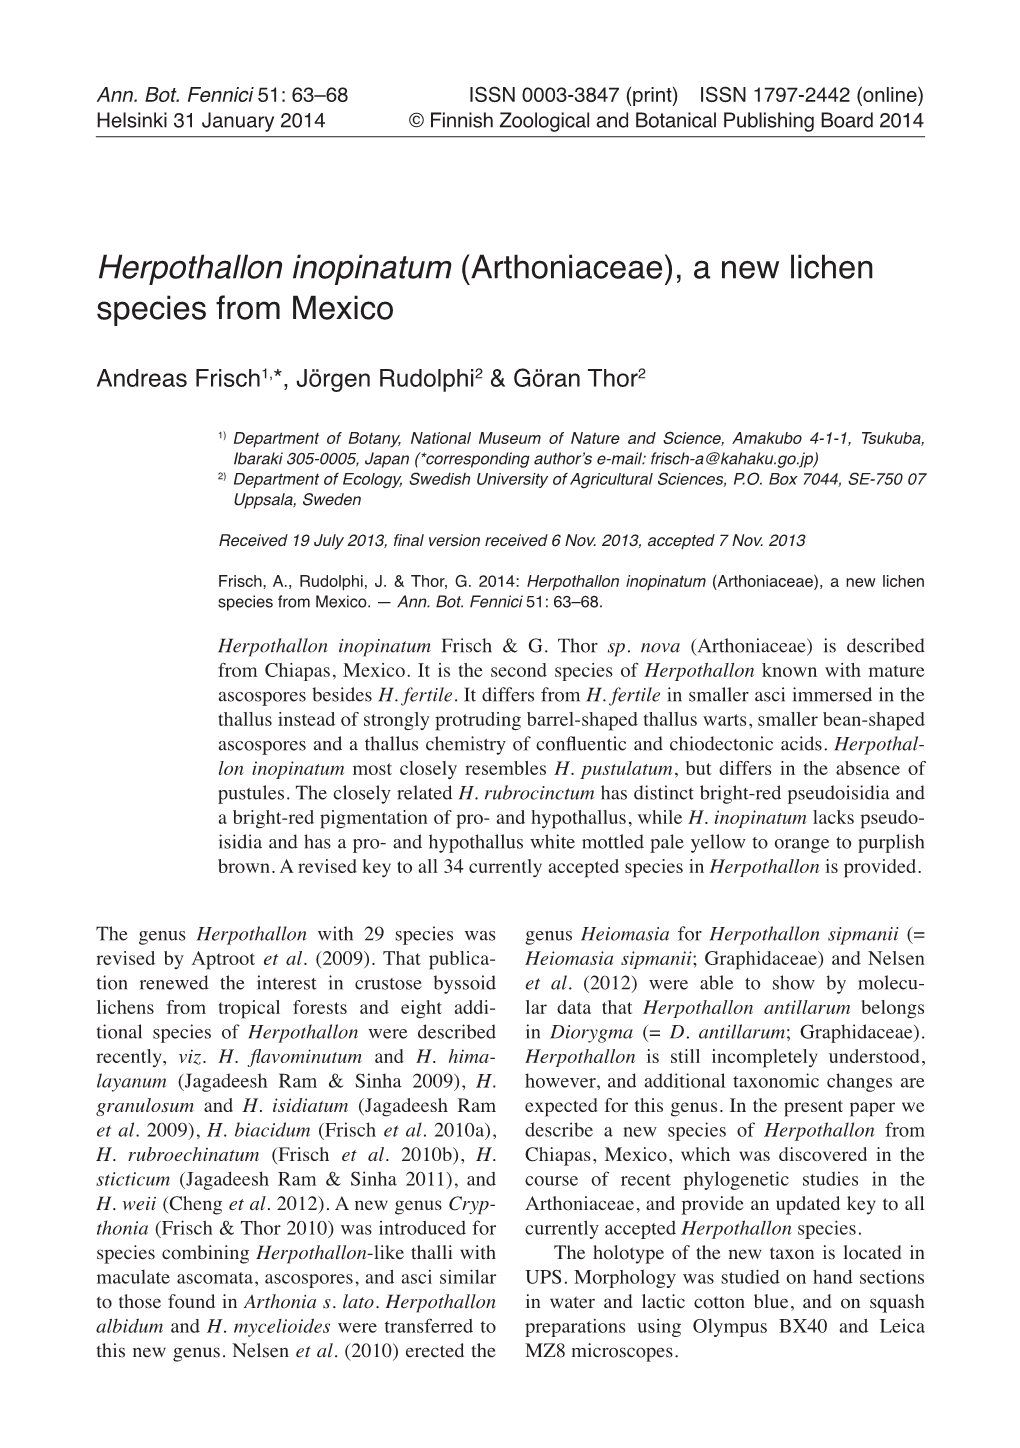 Herpothallon Inopinatum (Arthoniaceae), a New Lichen Species from Mexico